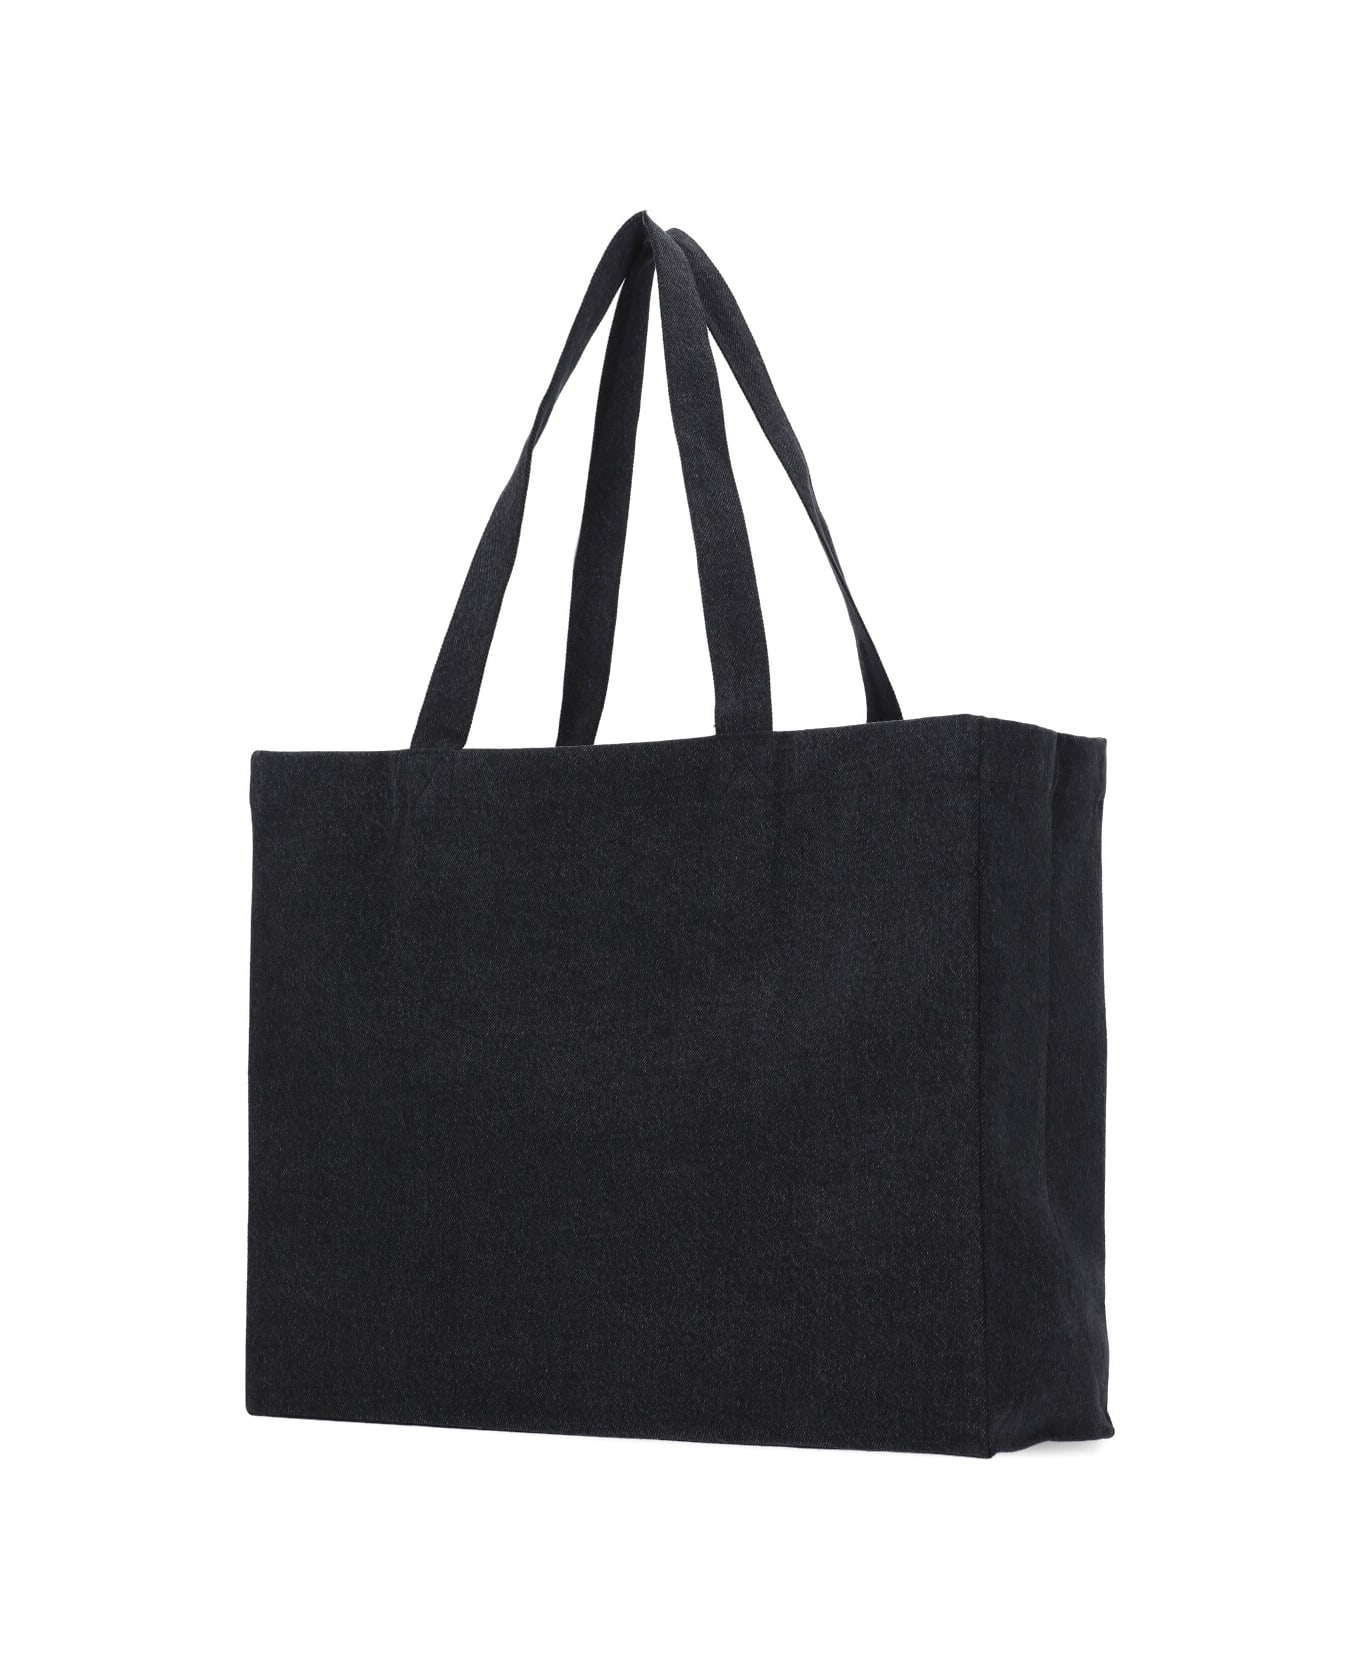 A.P.C. Diane Shopper Bag - Black トートバッグ